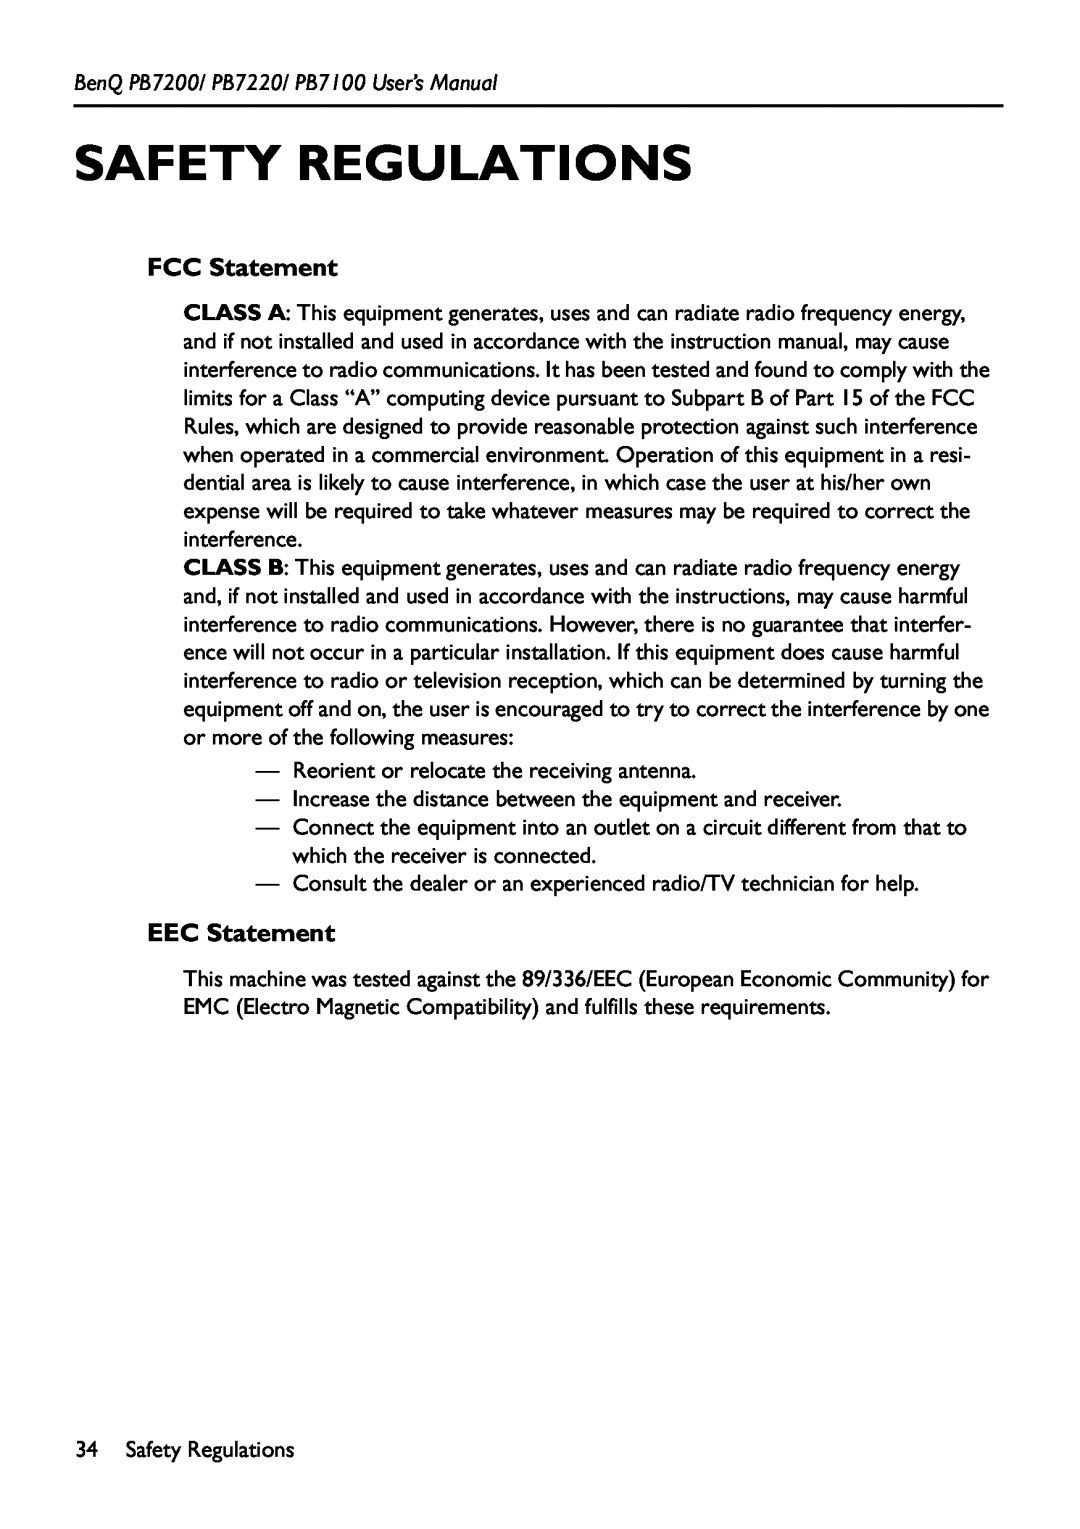 BenQ manual Safety Regulations, FCC Statement, EEC Statement, BenQ PB7200/ PB7220/ PB7100 User’s Manual 